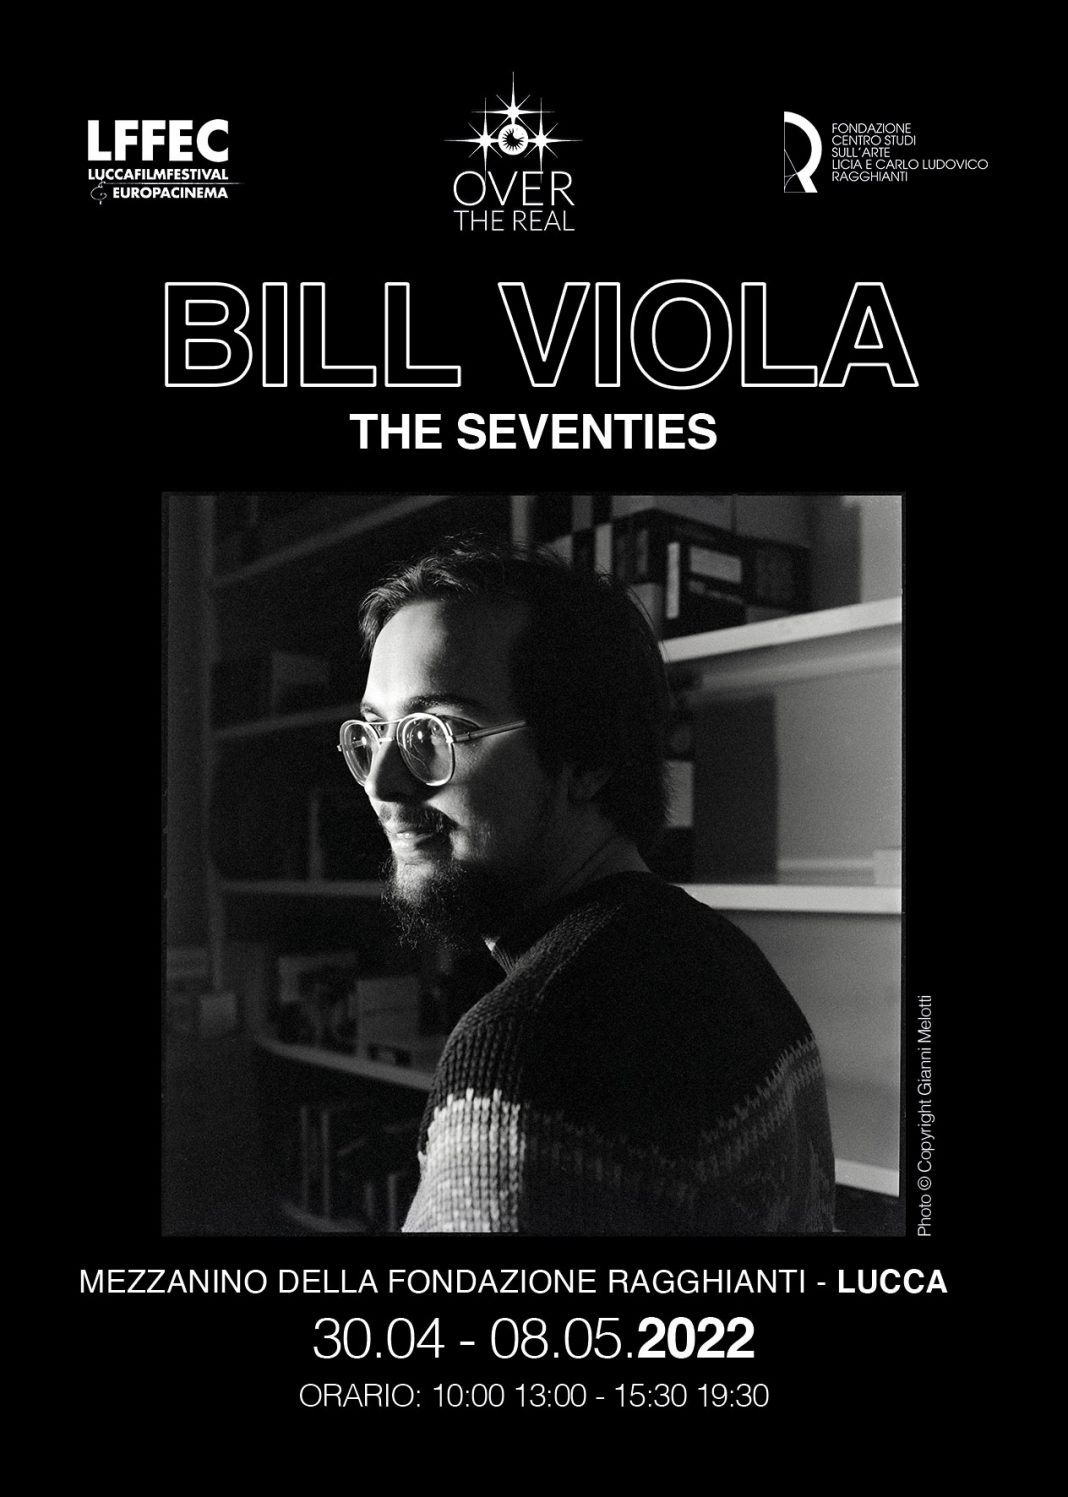 Bill Viola – The Seventieshttps://www.exibart.com/repository/media/formidable/11/img/672/WEBcartolinaFRONTEbillviola-1068x1497.jpg